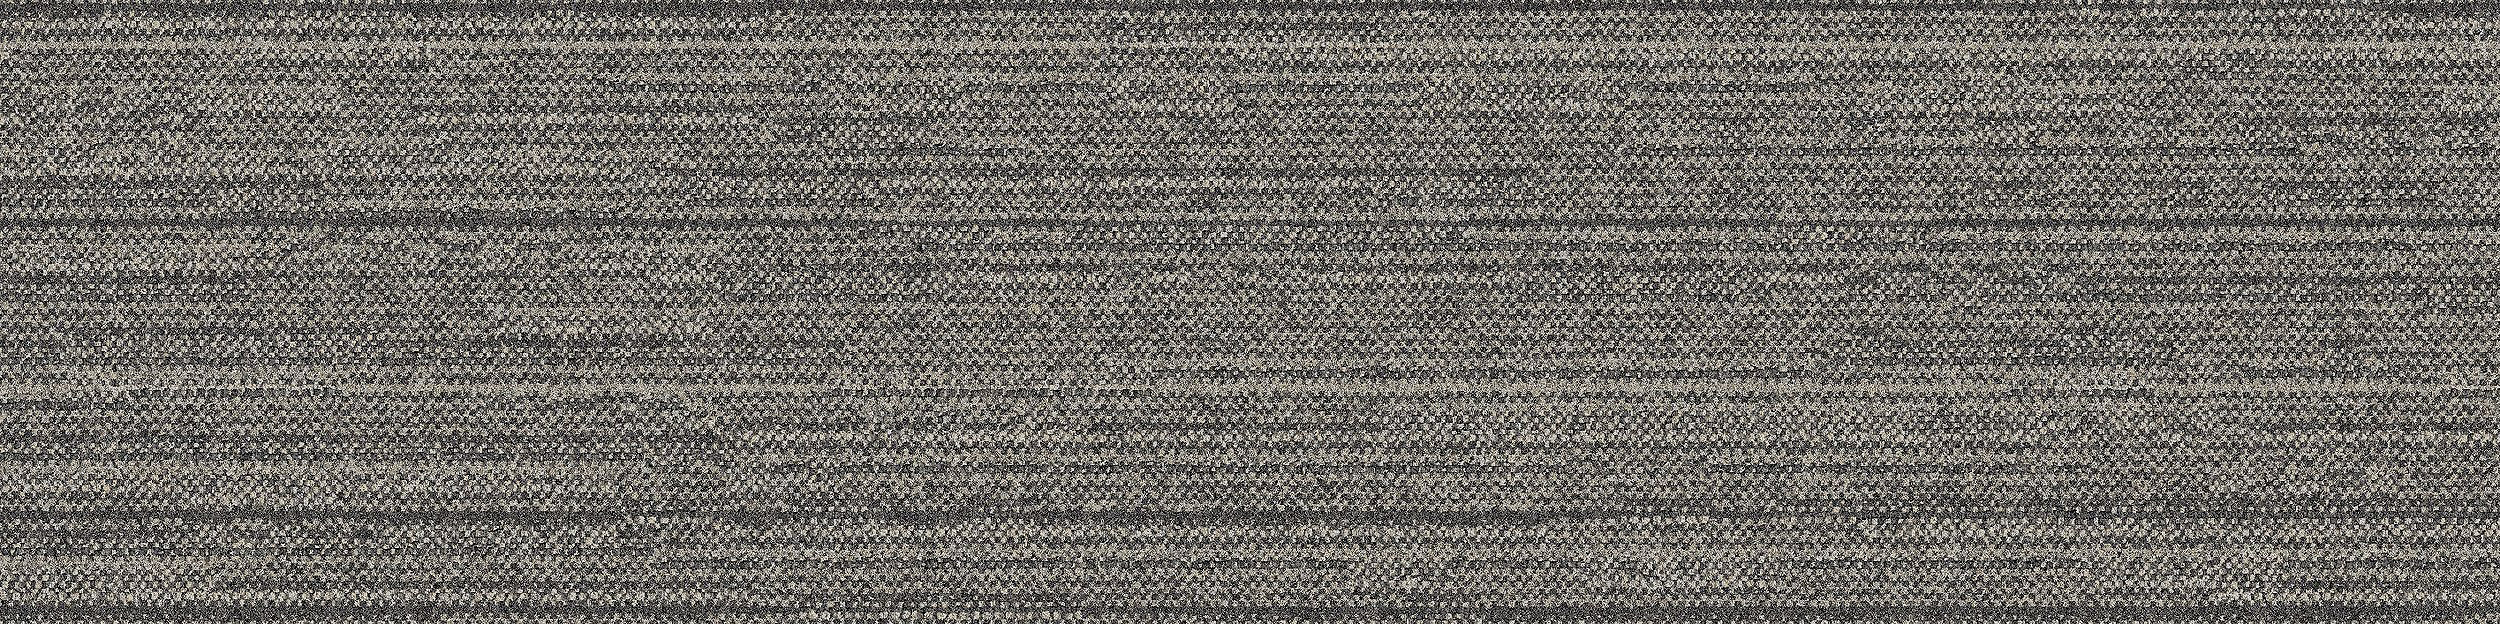 WW880 Carpet Tile In Natural Loom Bildnummer 8